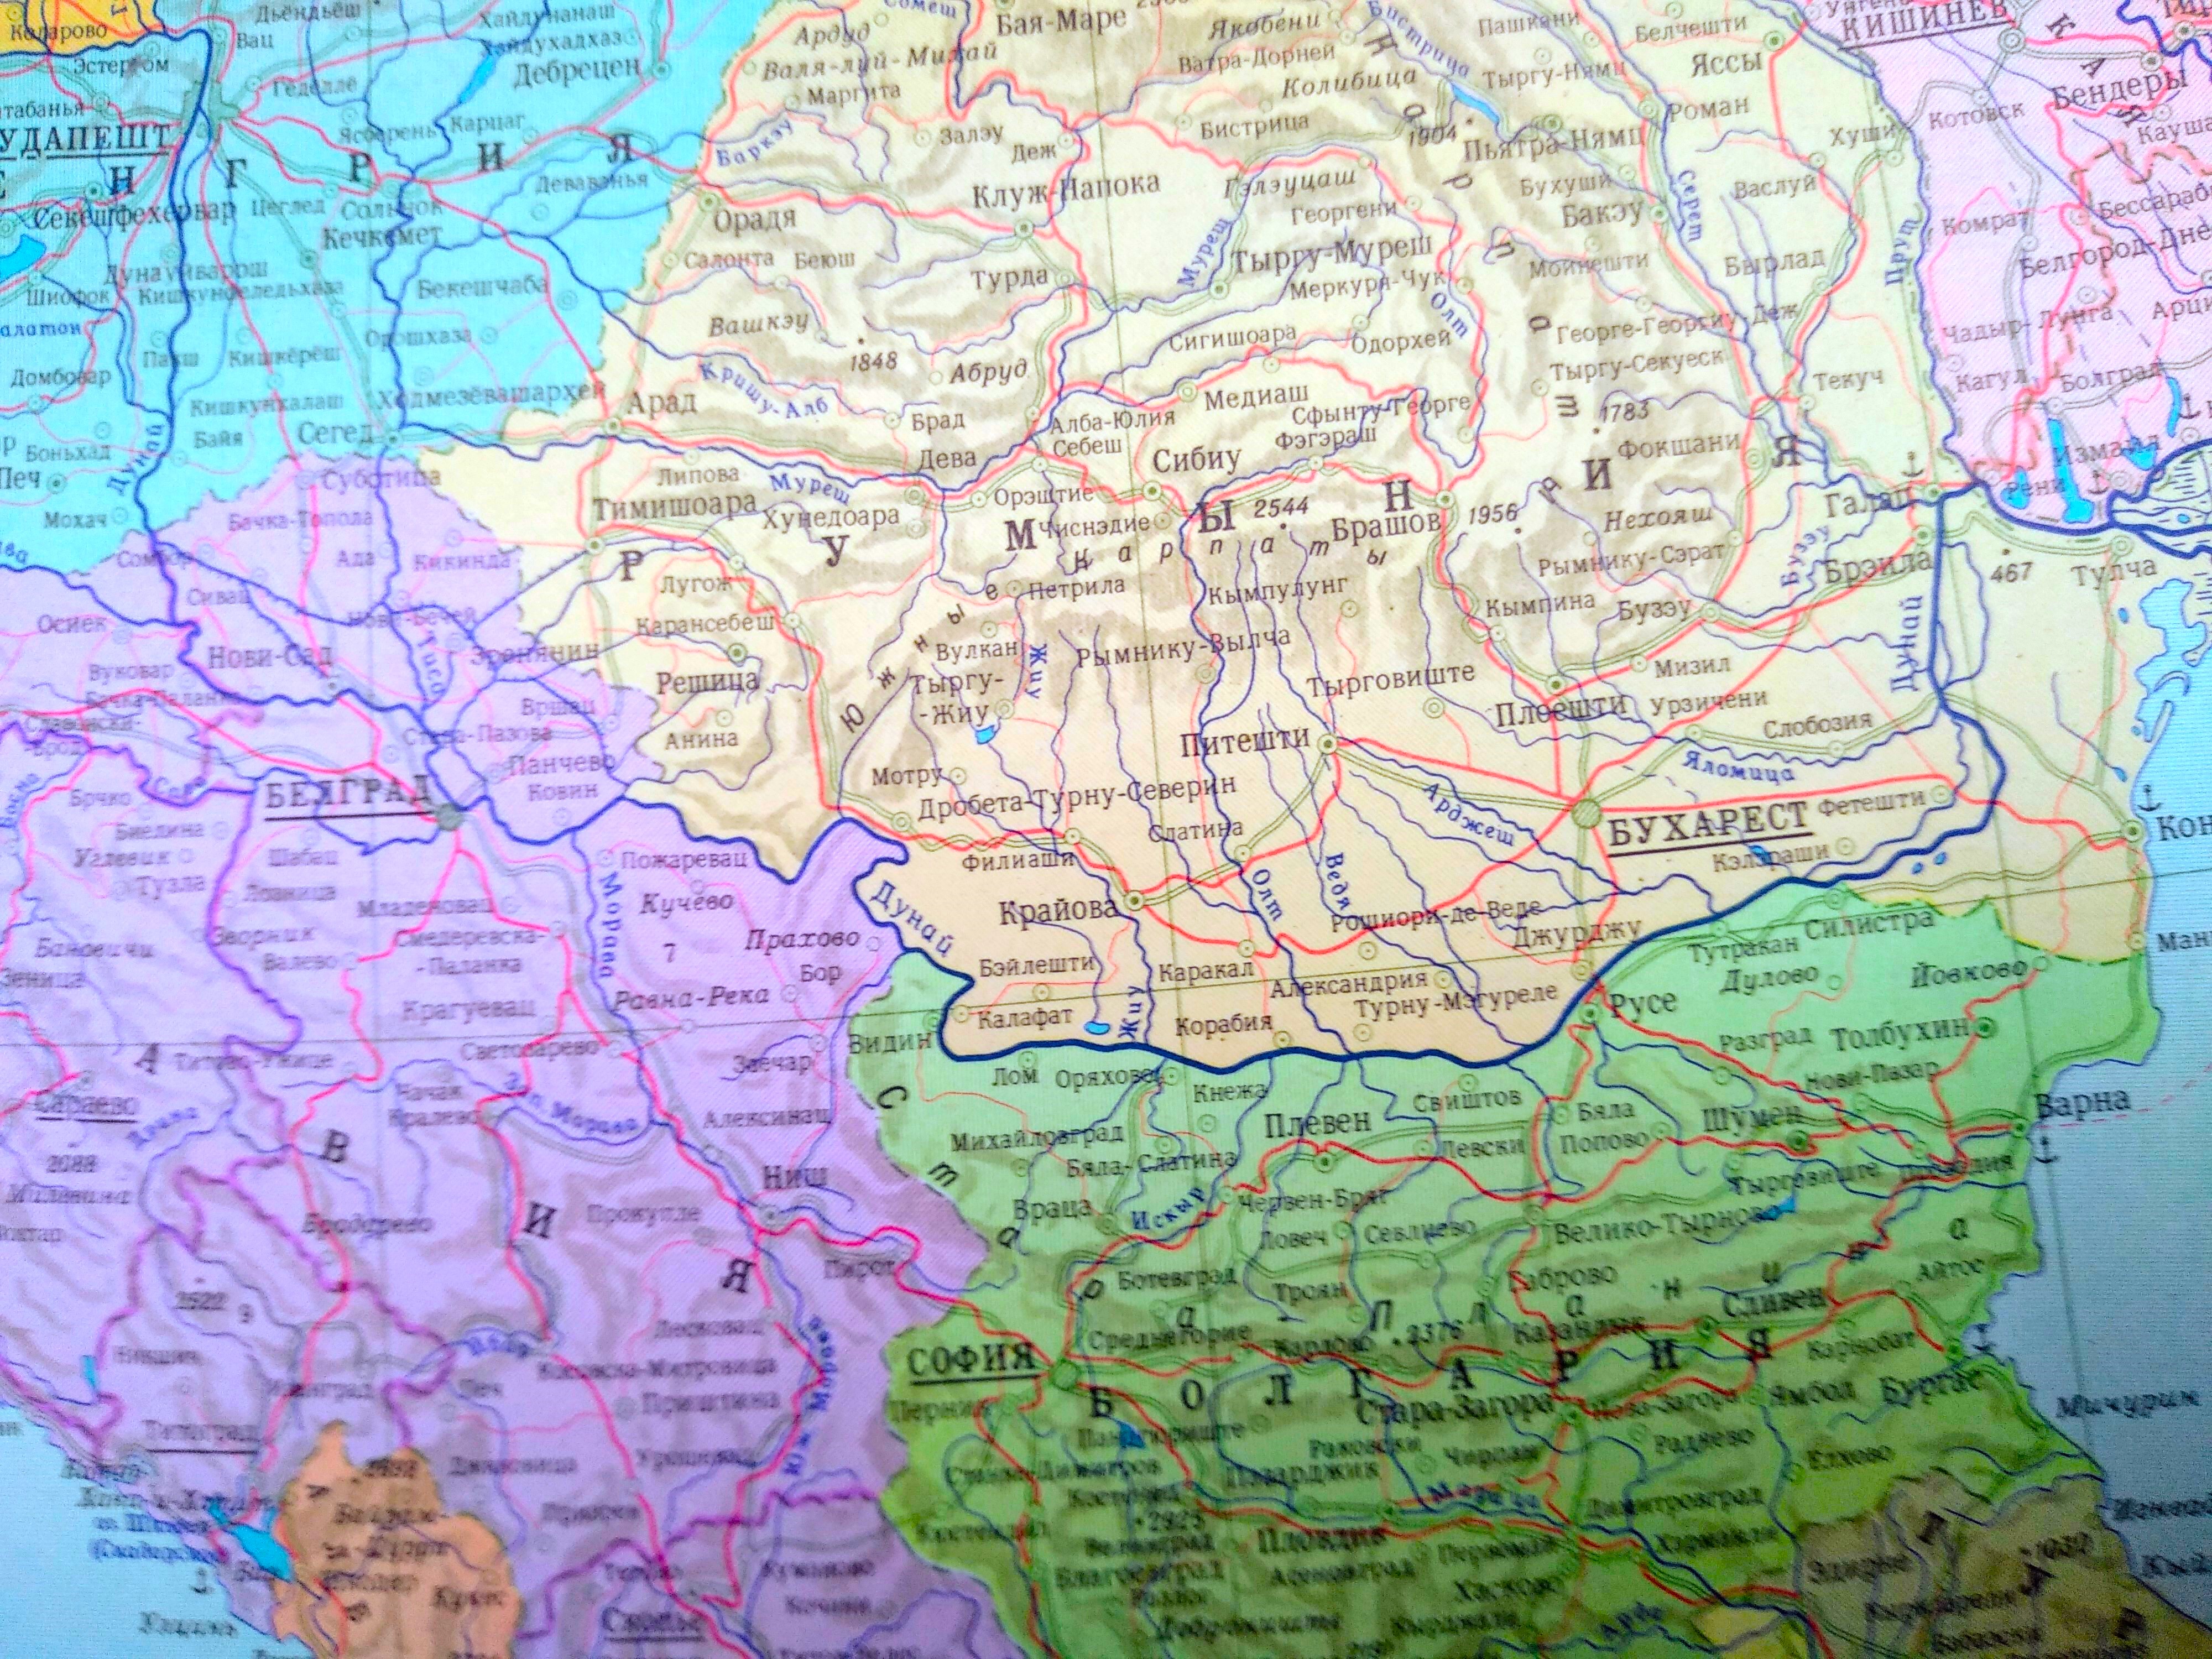 Бухарест и Белград - на карте из атласа.jpg